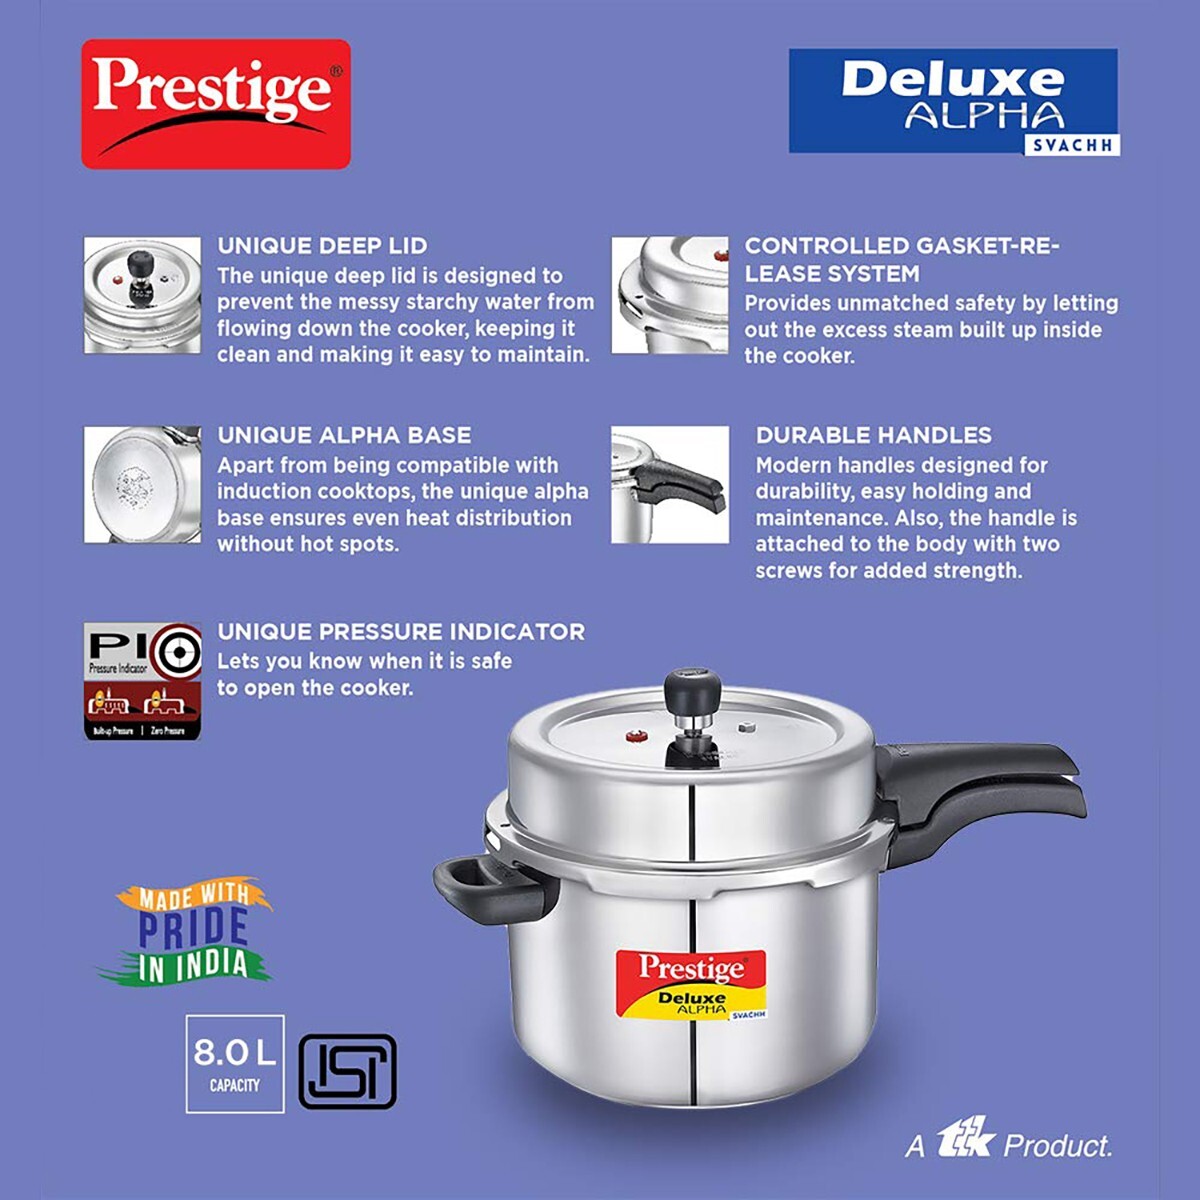 Prestige Stainless Steel Pressure Cooker Svachh Deluxe Alpha 8L